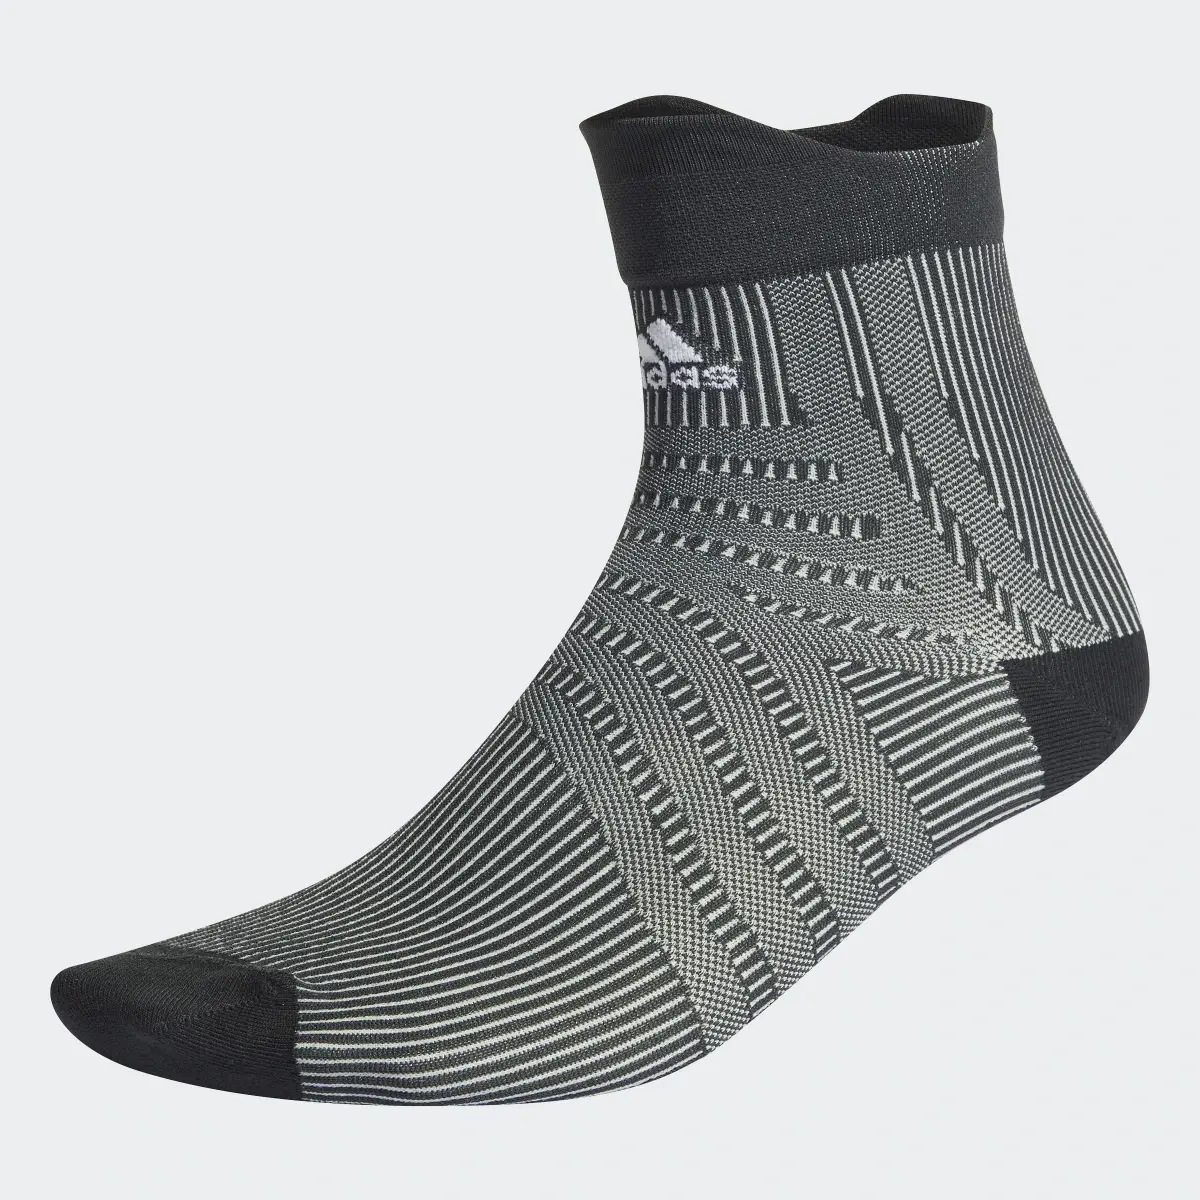 Adidas Performance Graphic Quarter Socks. 2